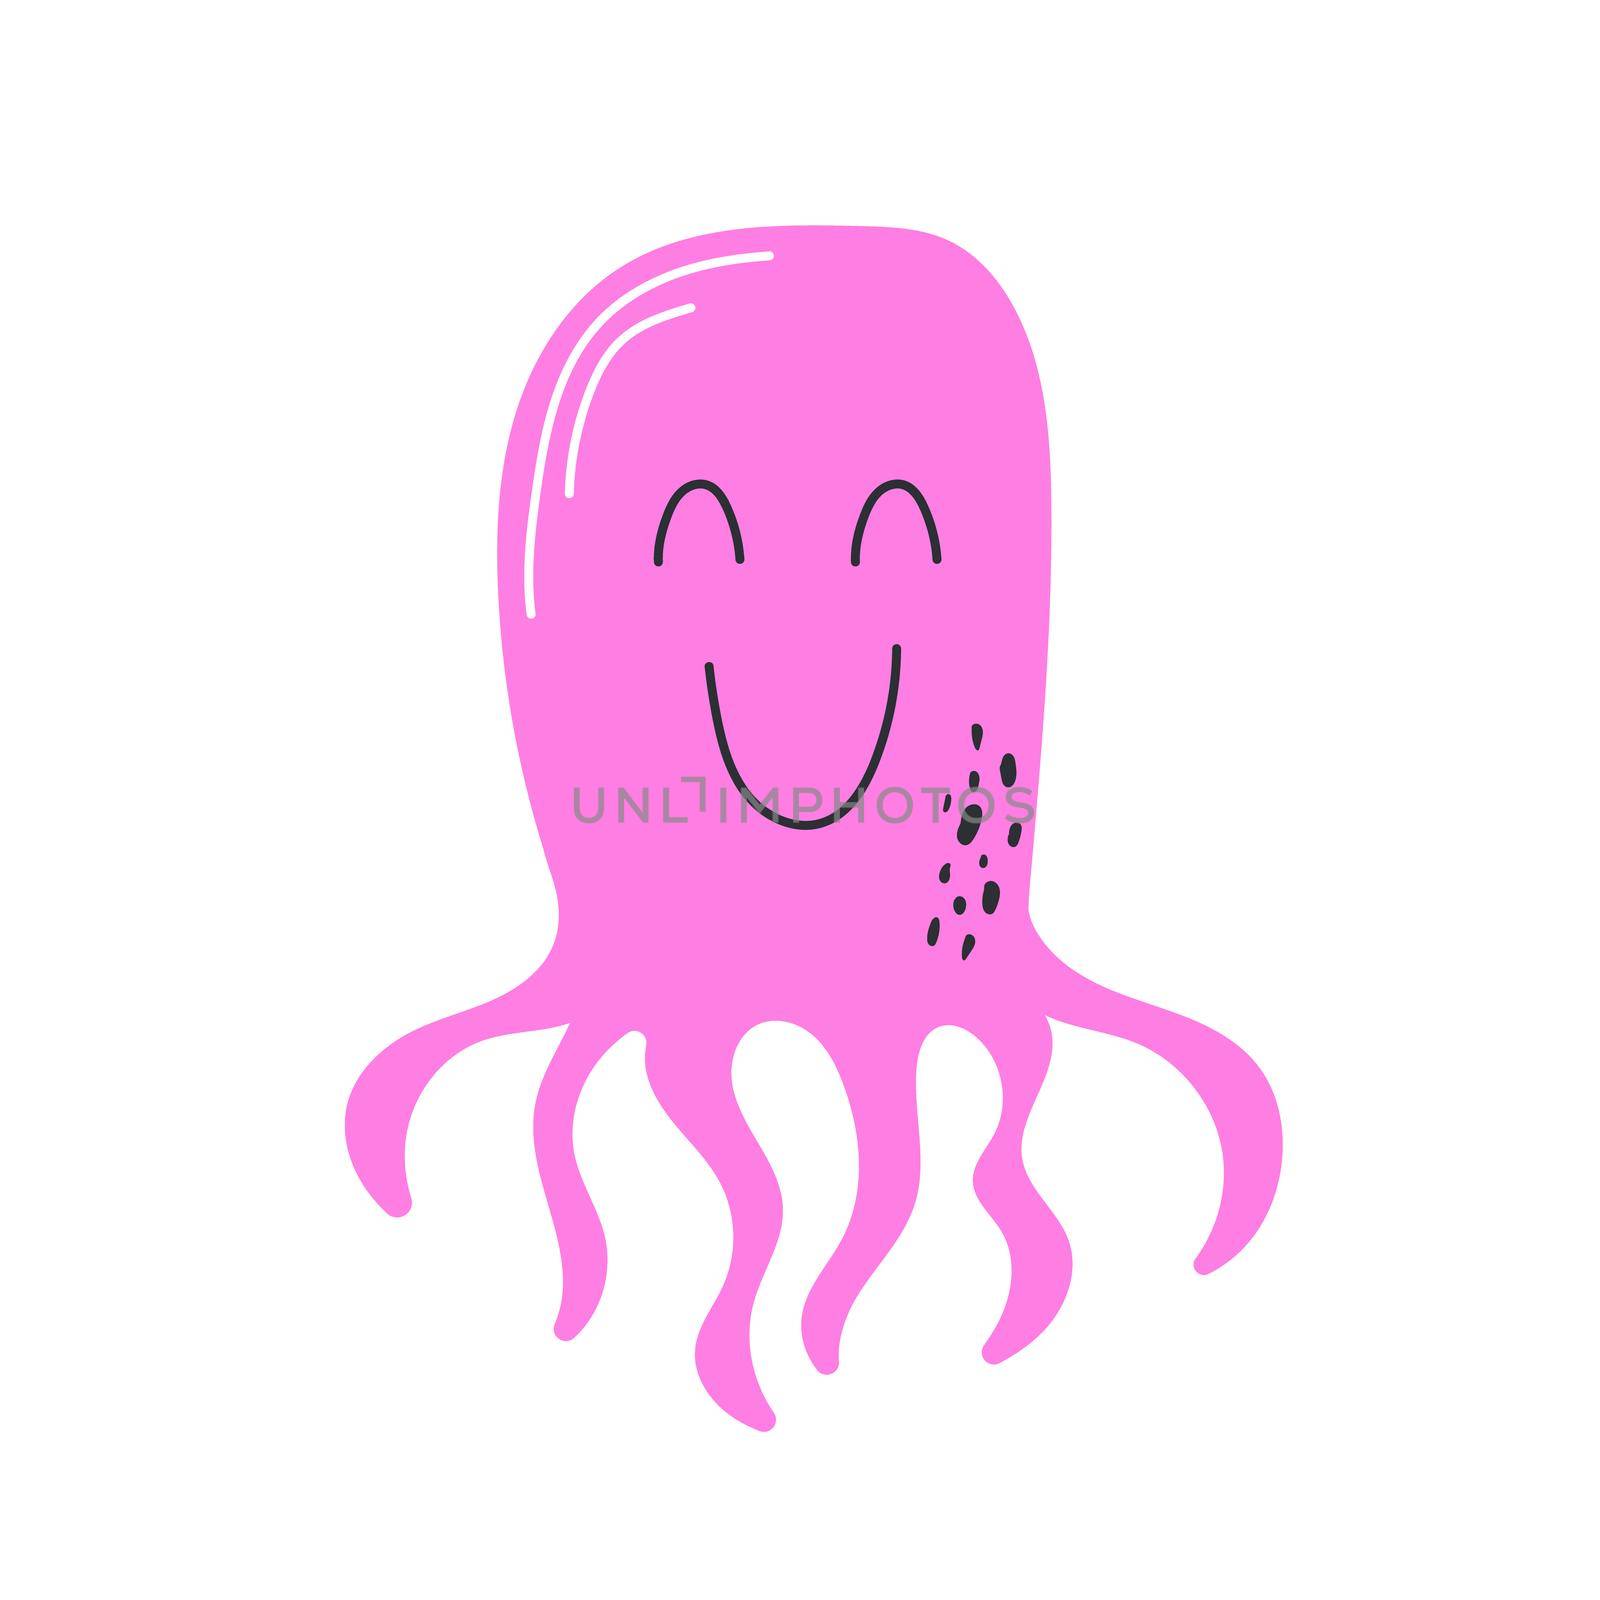 Octopus - funny cartoon character - original hand drawn illustration by natali_brill